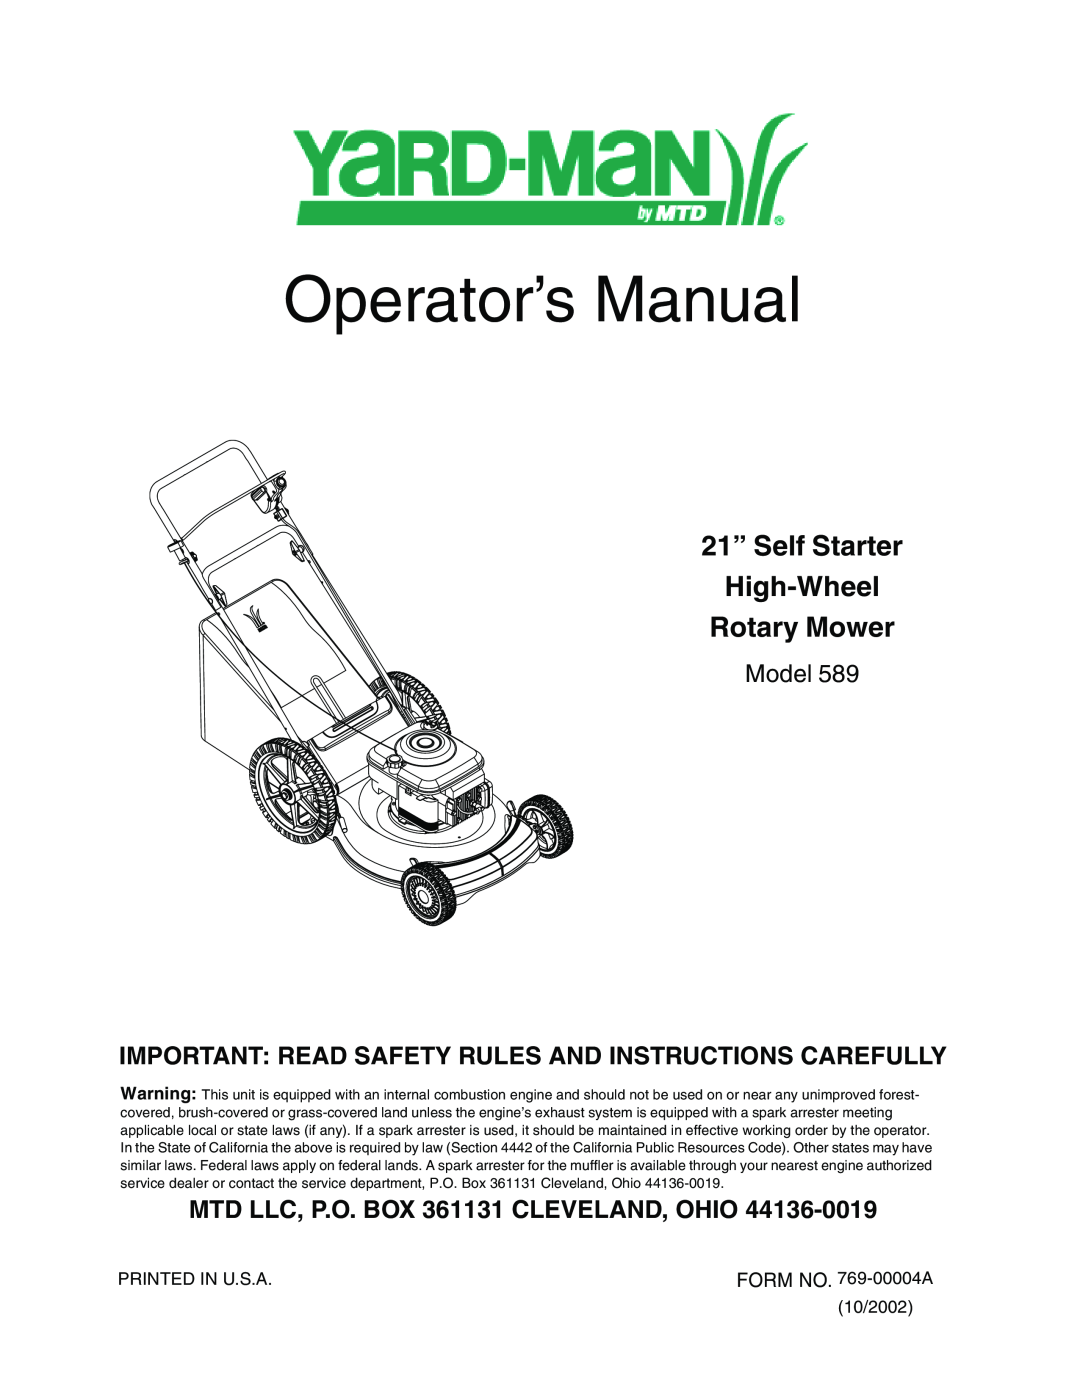 Bolens 589 manual Operator’s Manual, 21” Self Starter High-Wheel Rotary Mower, Model 